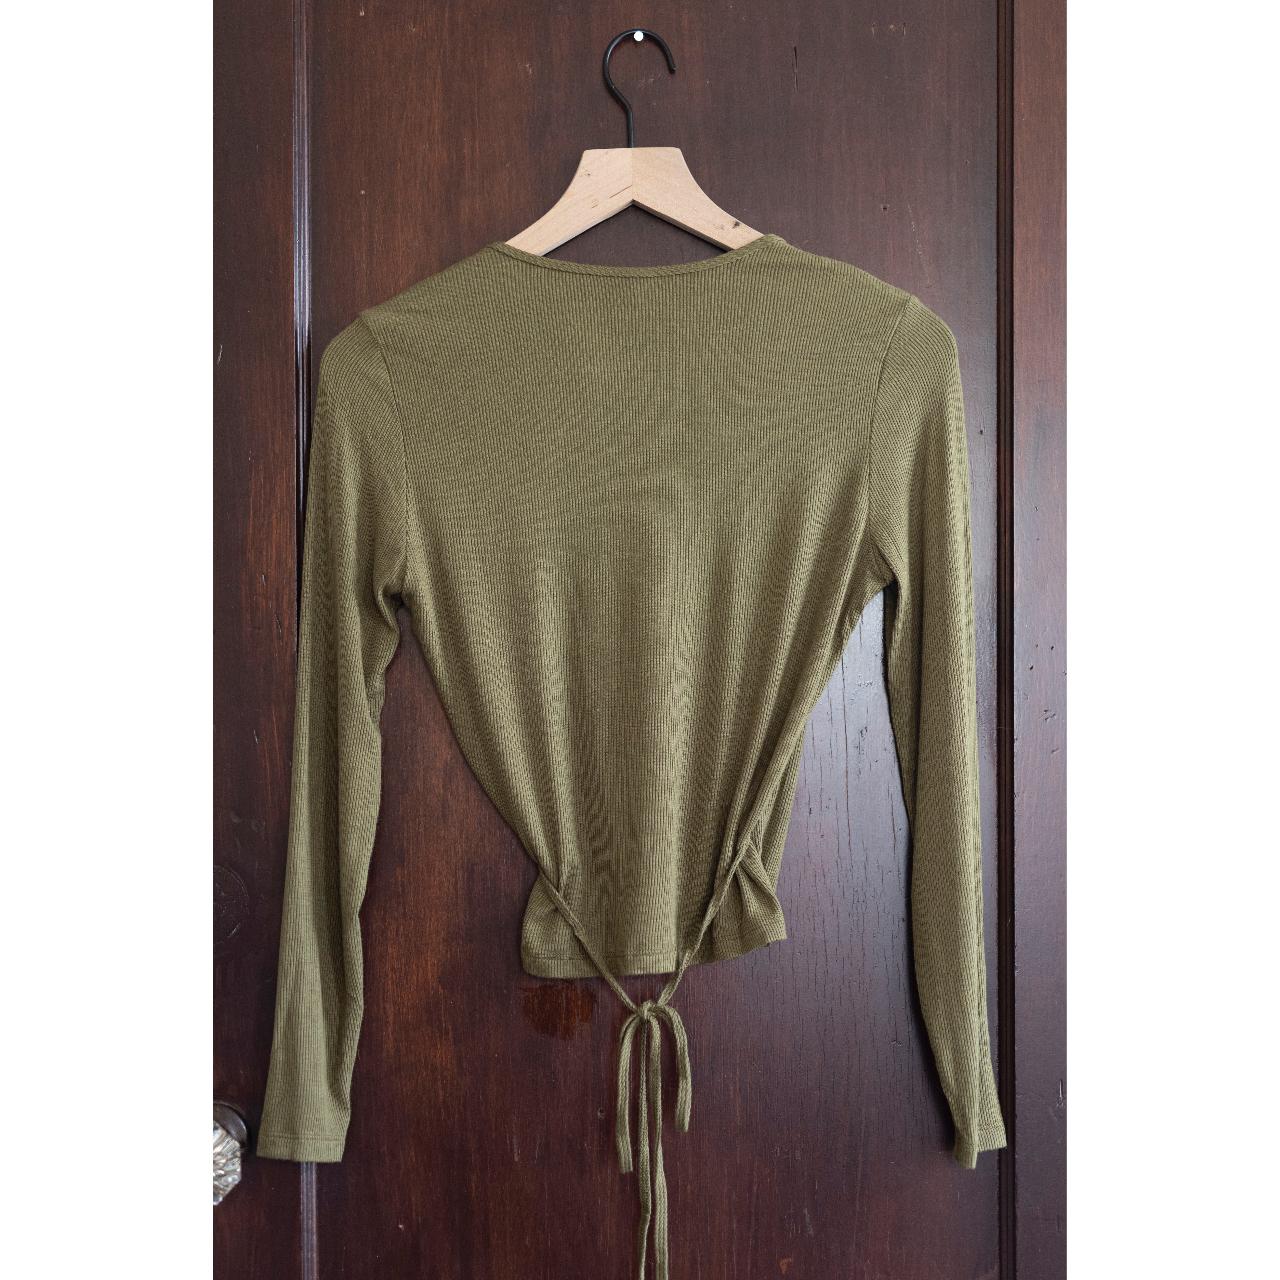 American Apparel Women's Green Shirt (2)